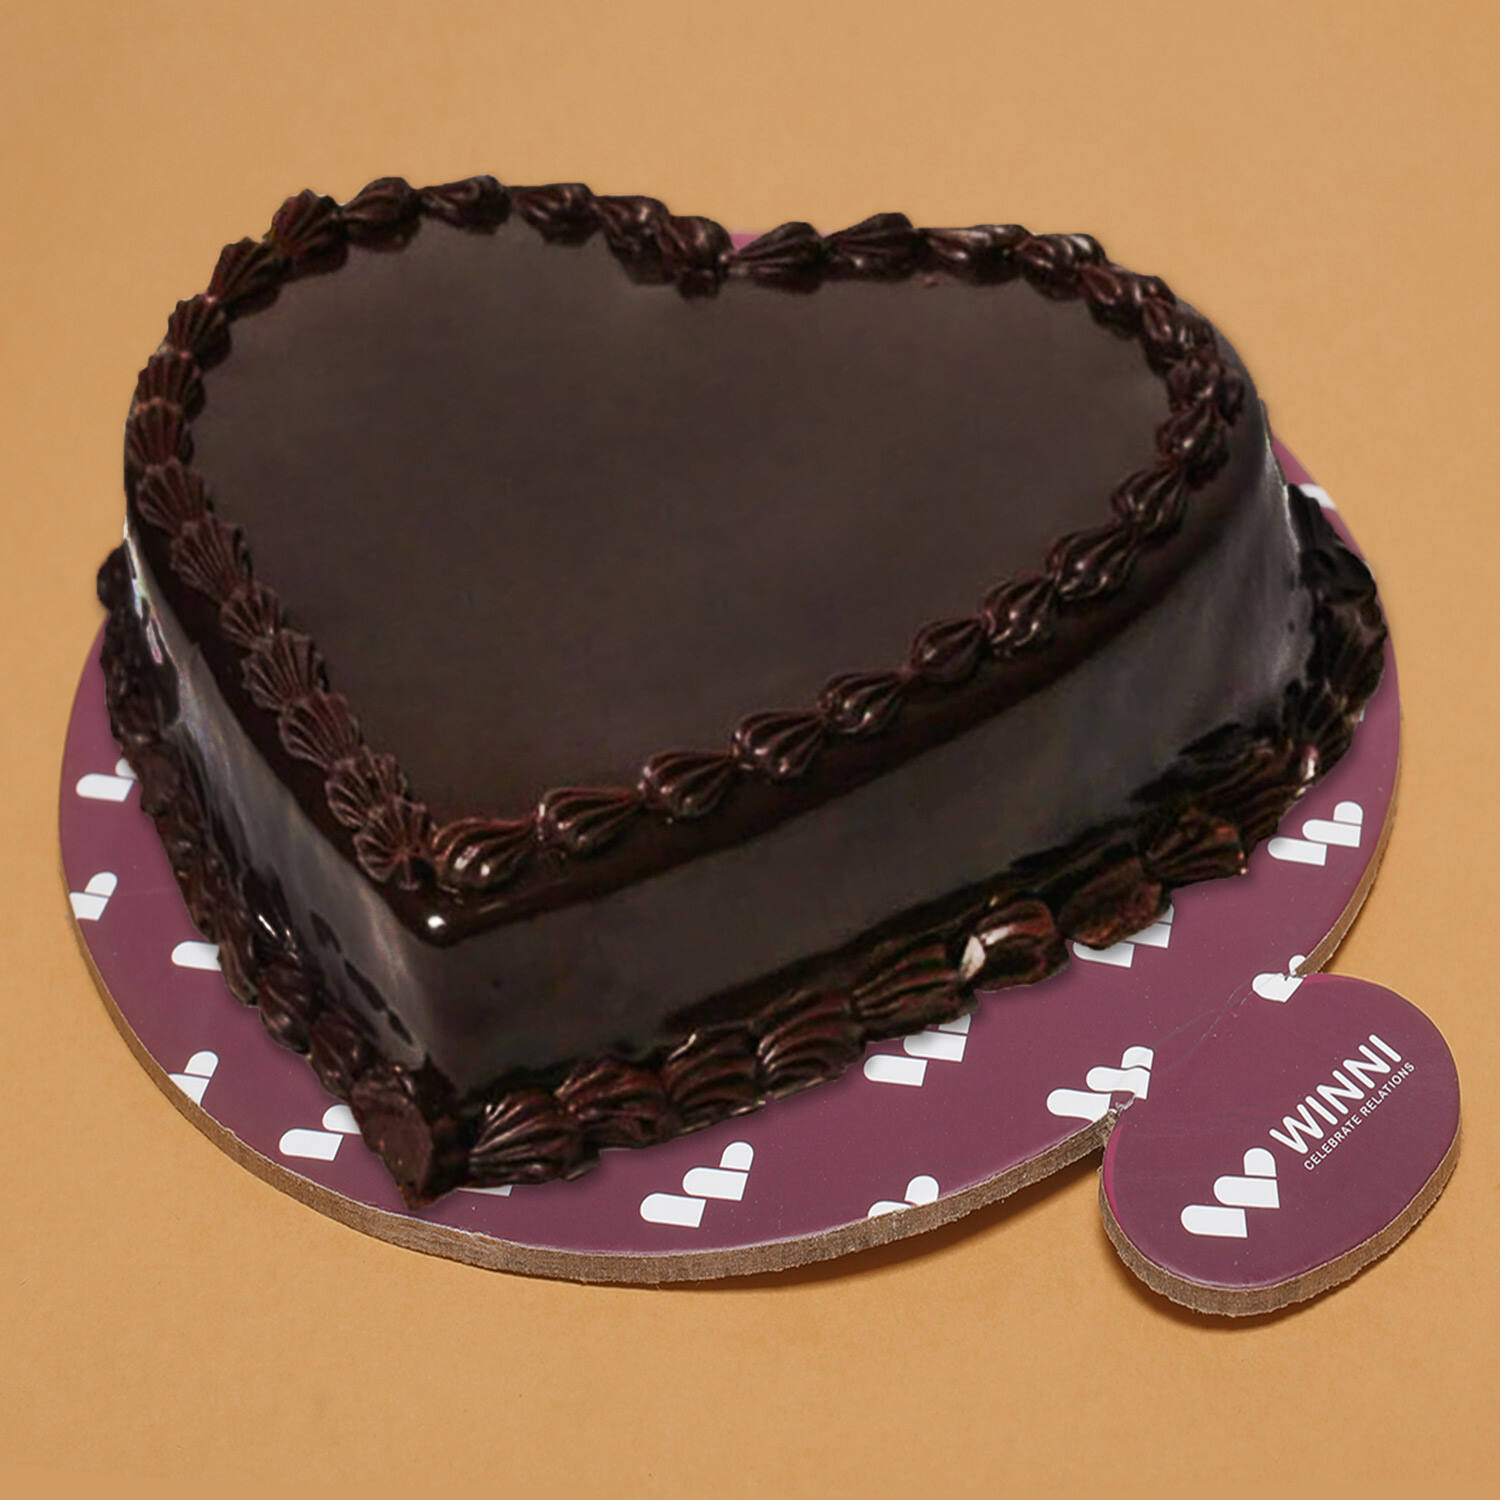 Heart Shape Chocolate Cake Tutorial |Heart Shape Chocolate Cake Design |Birthday  Chocolate Cake - YouTube